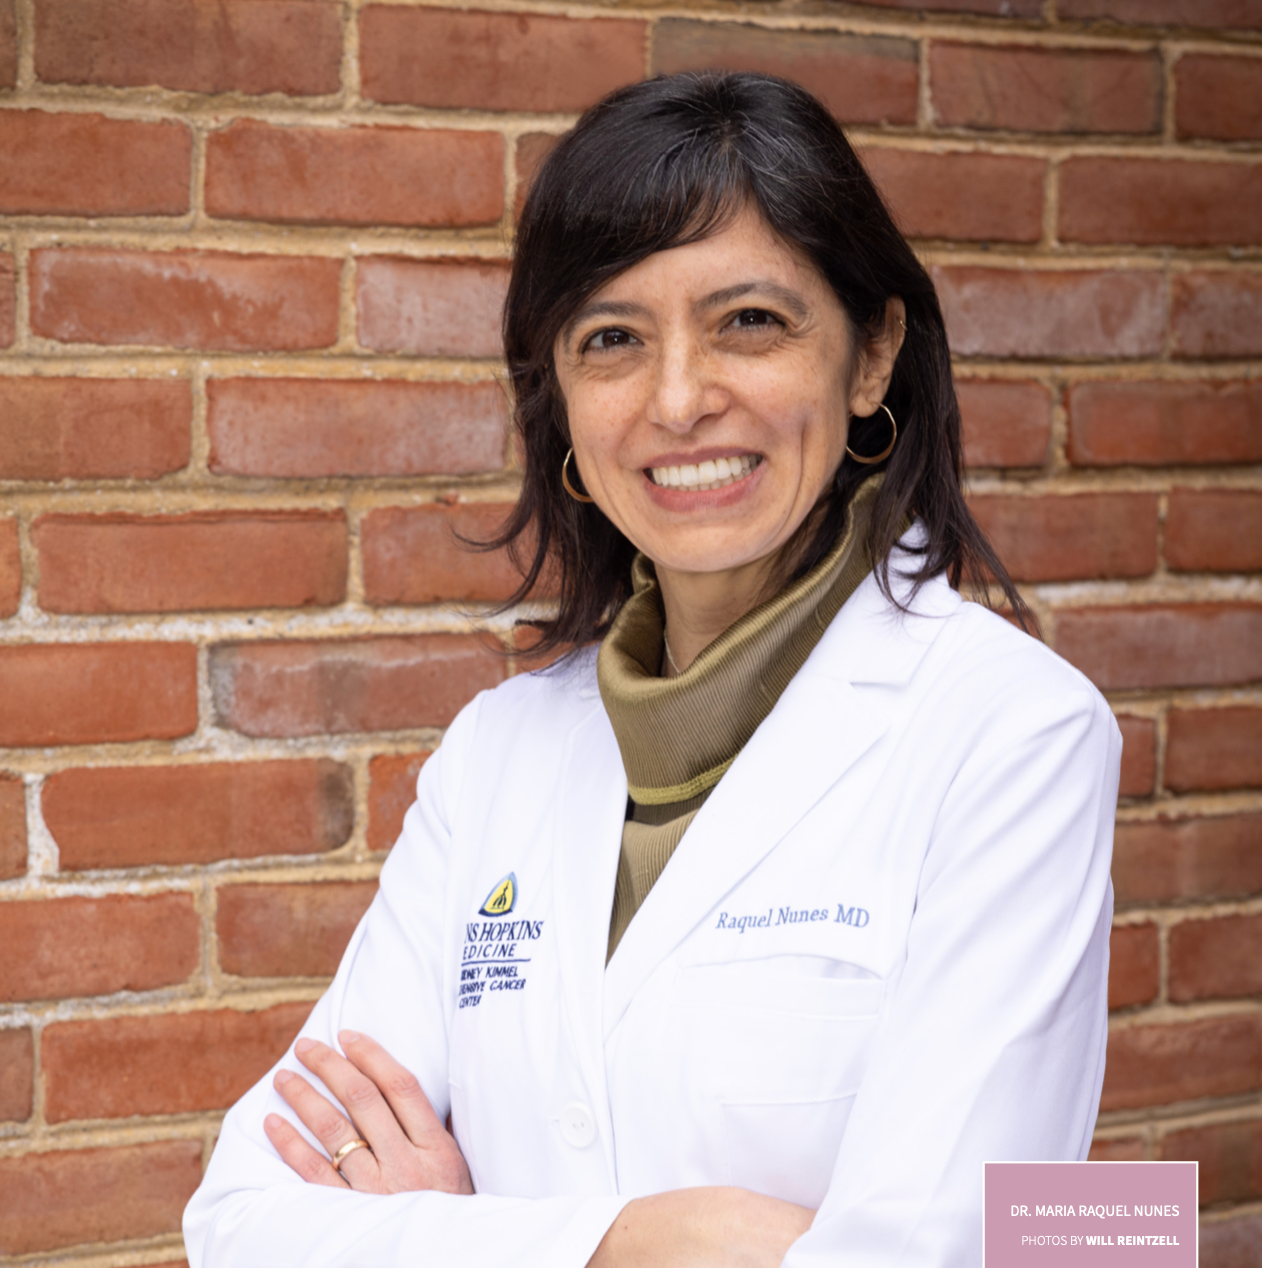 Dr. Maria Raquel Nunes. Photos by Will Reintzell.